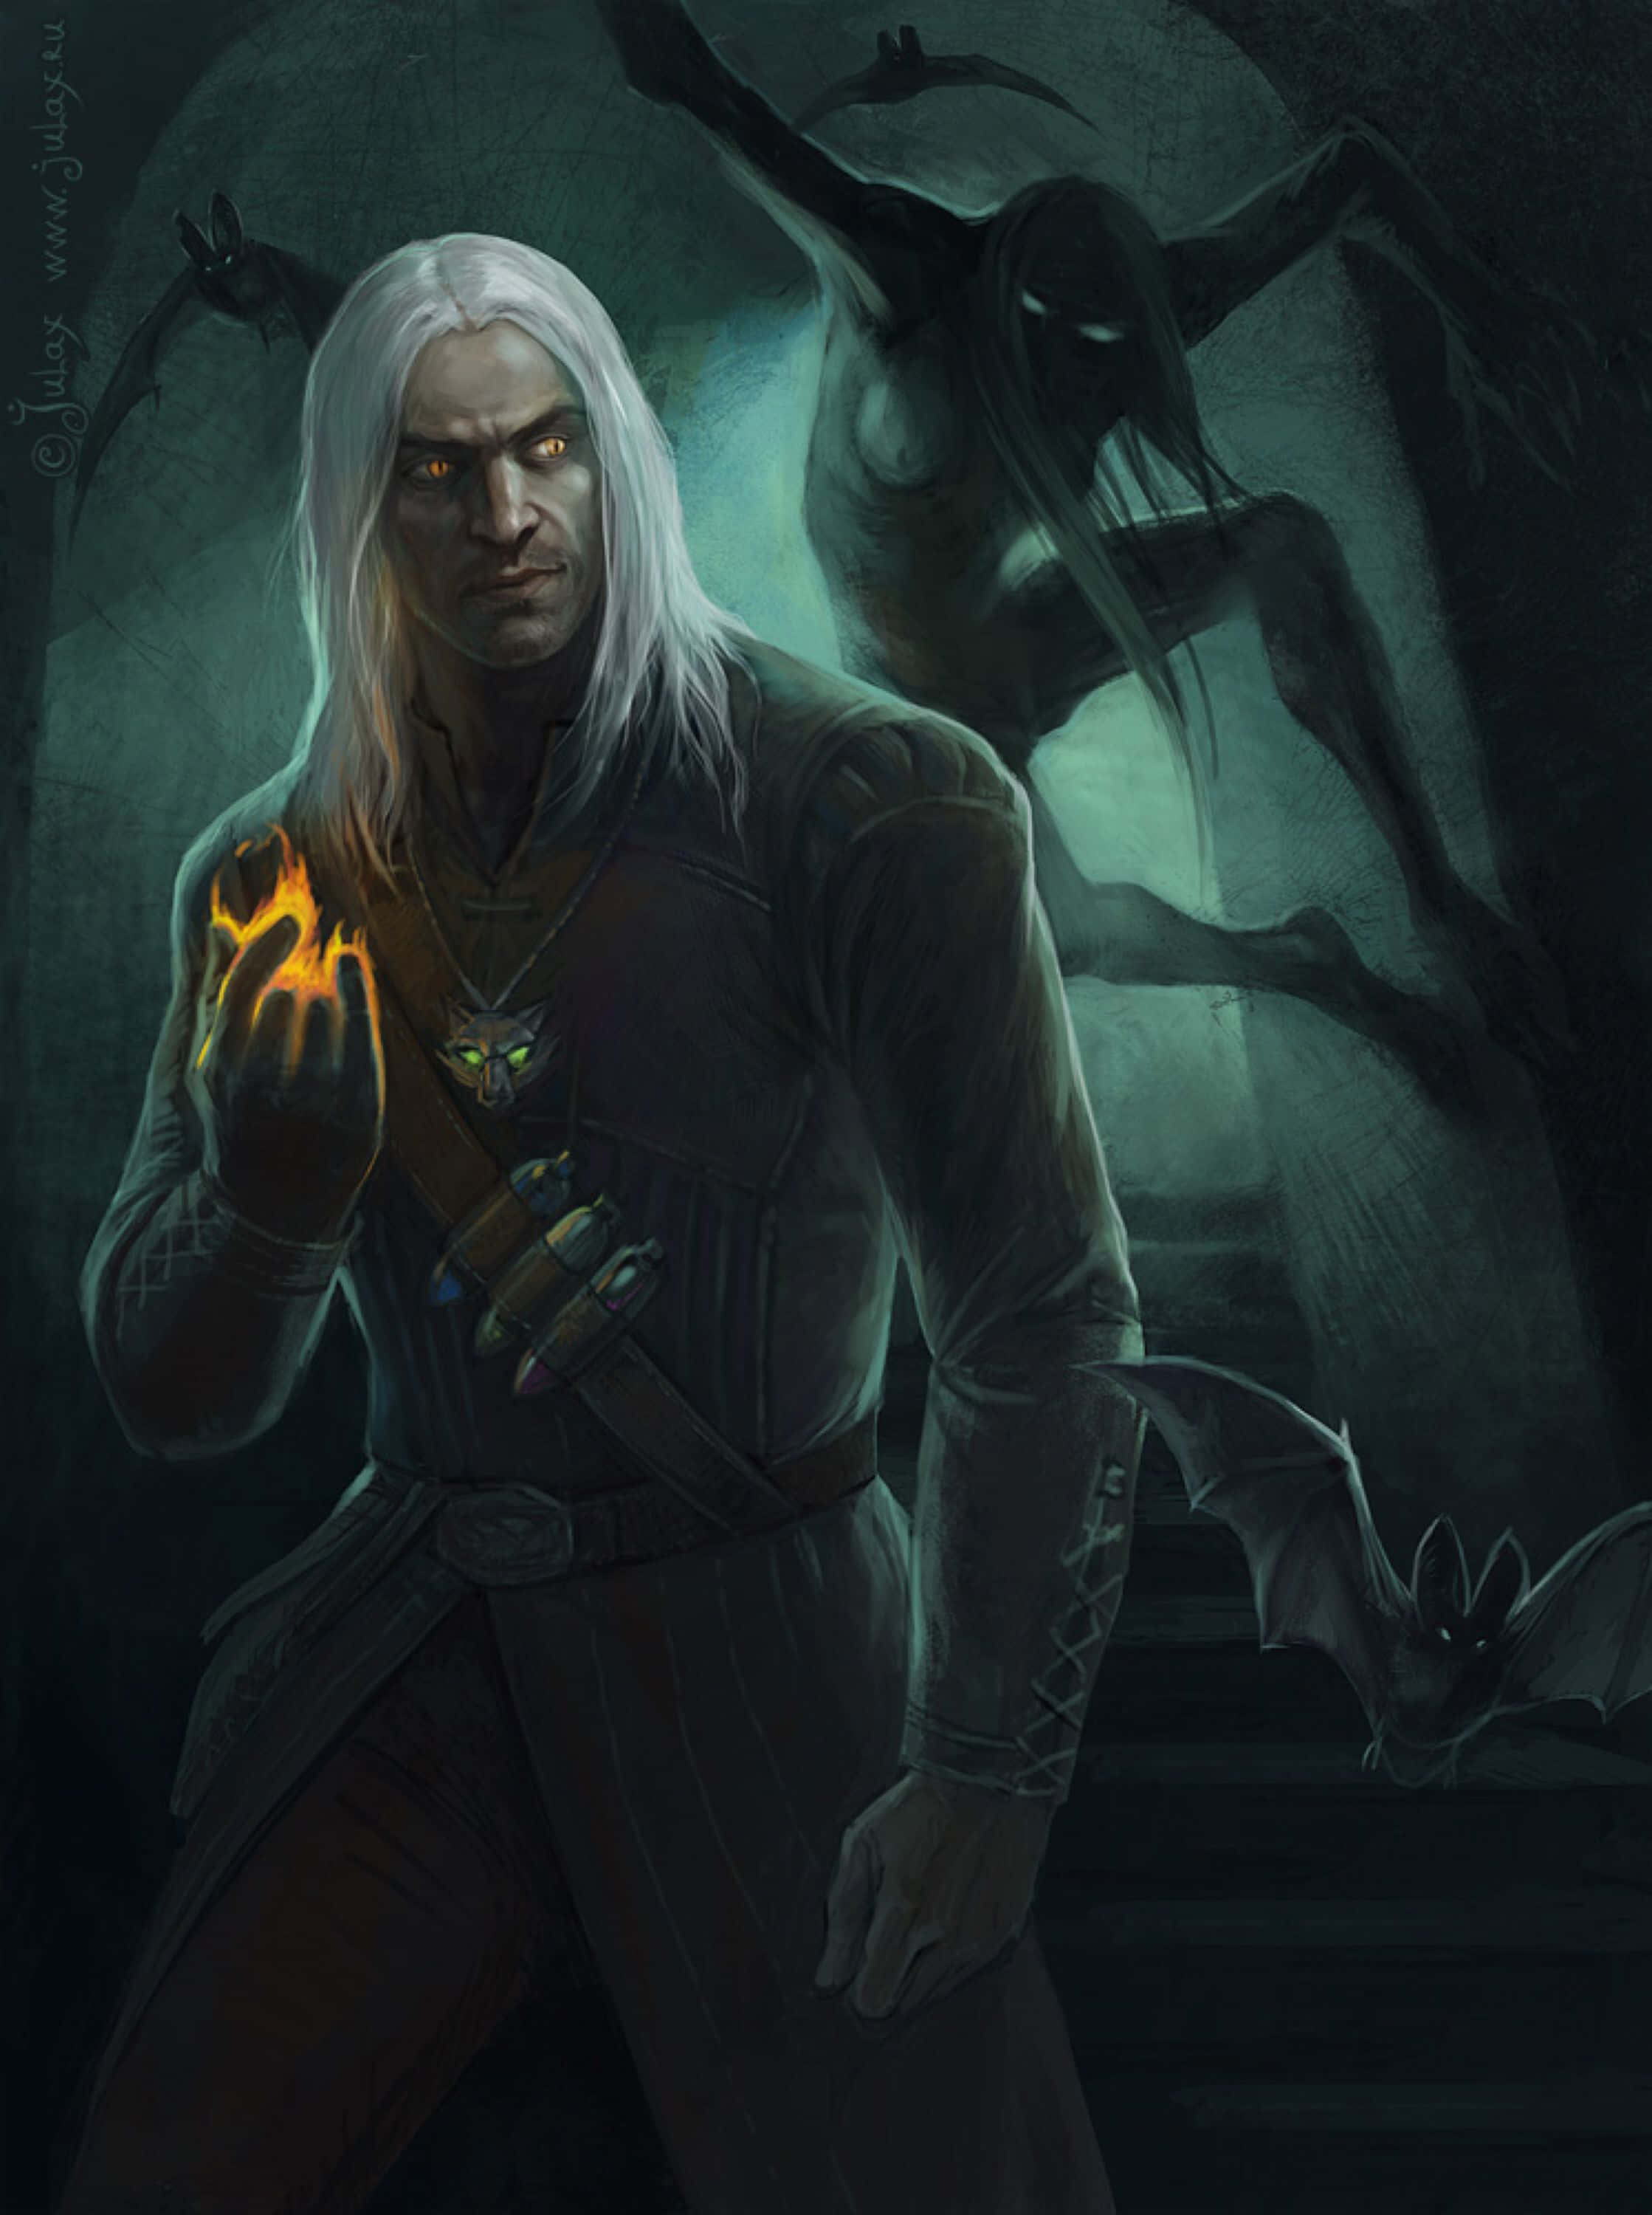 Geralt Of Rivia, The Monster Hunter In Action. Wallpaper